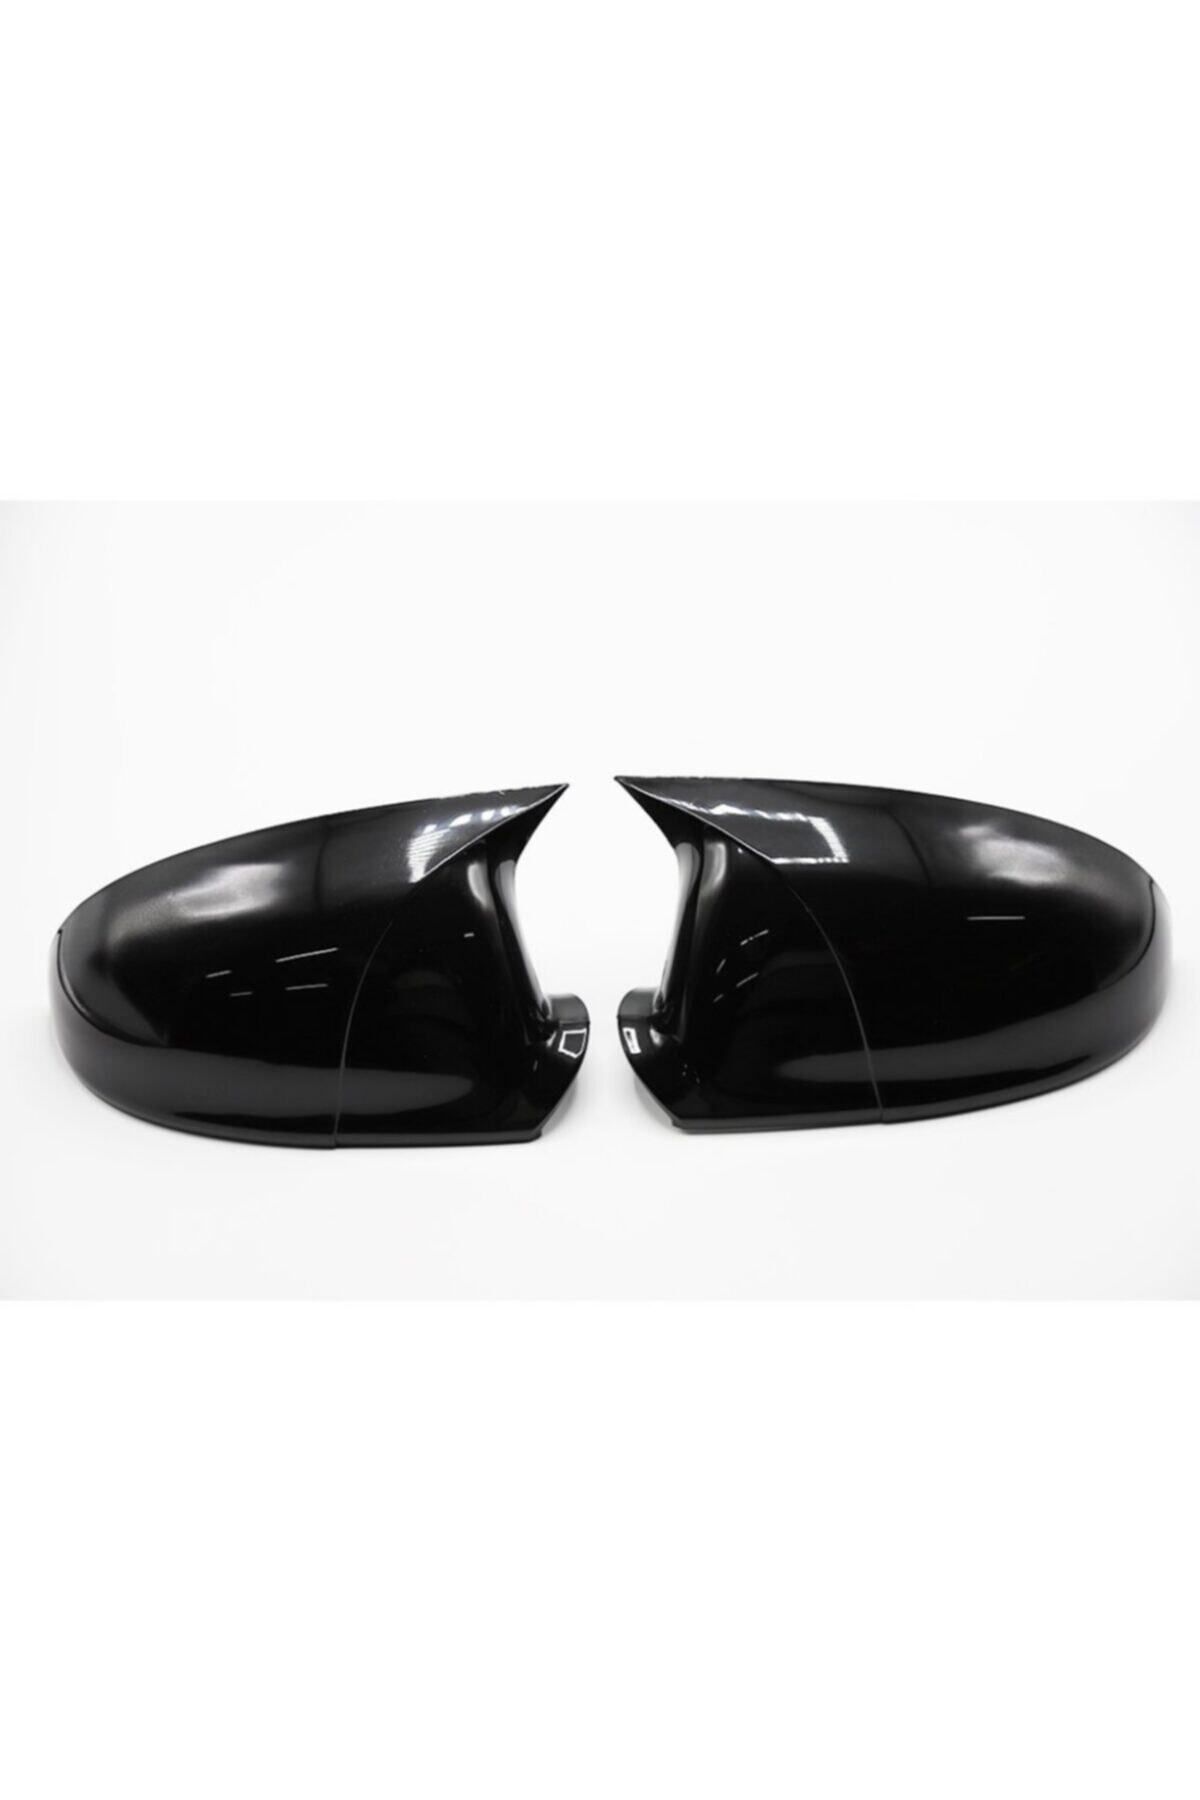 Bat Mirror Cover For Megane 3 Fluence Scenic 2009-2016 Car Accessories  Renault Rs Gt Piano Black Tuning Auto Sport Bat Design